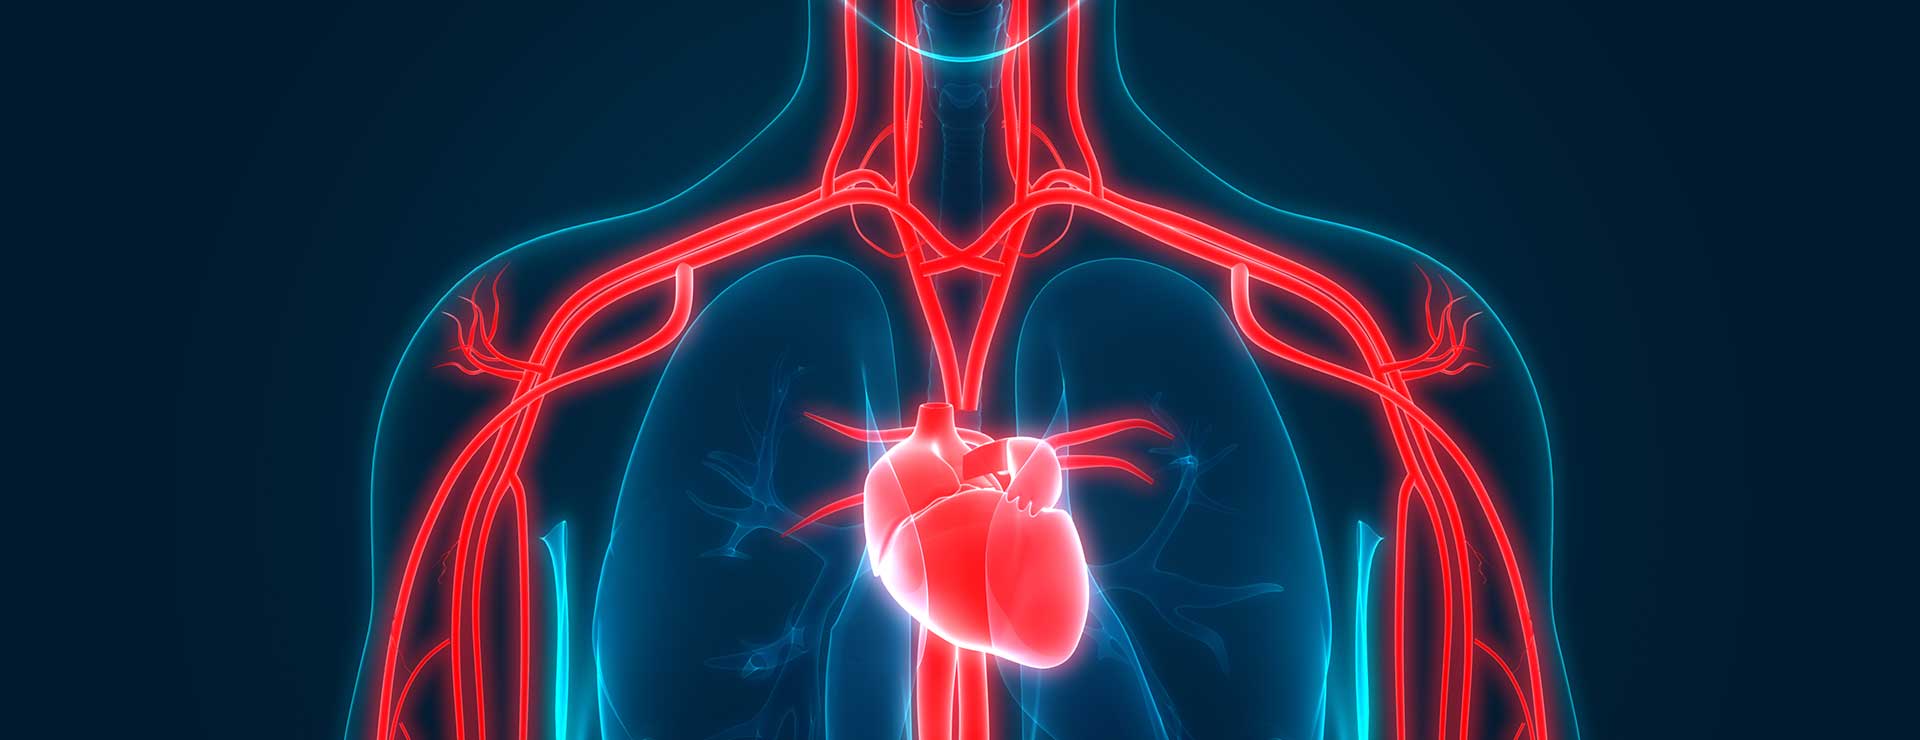 Heart Health | Johns Hopkins Medicine